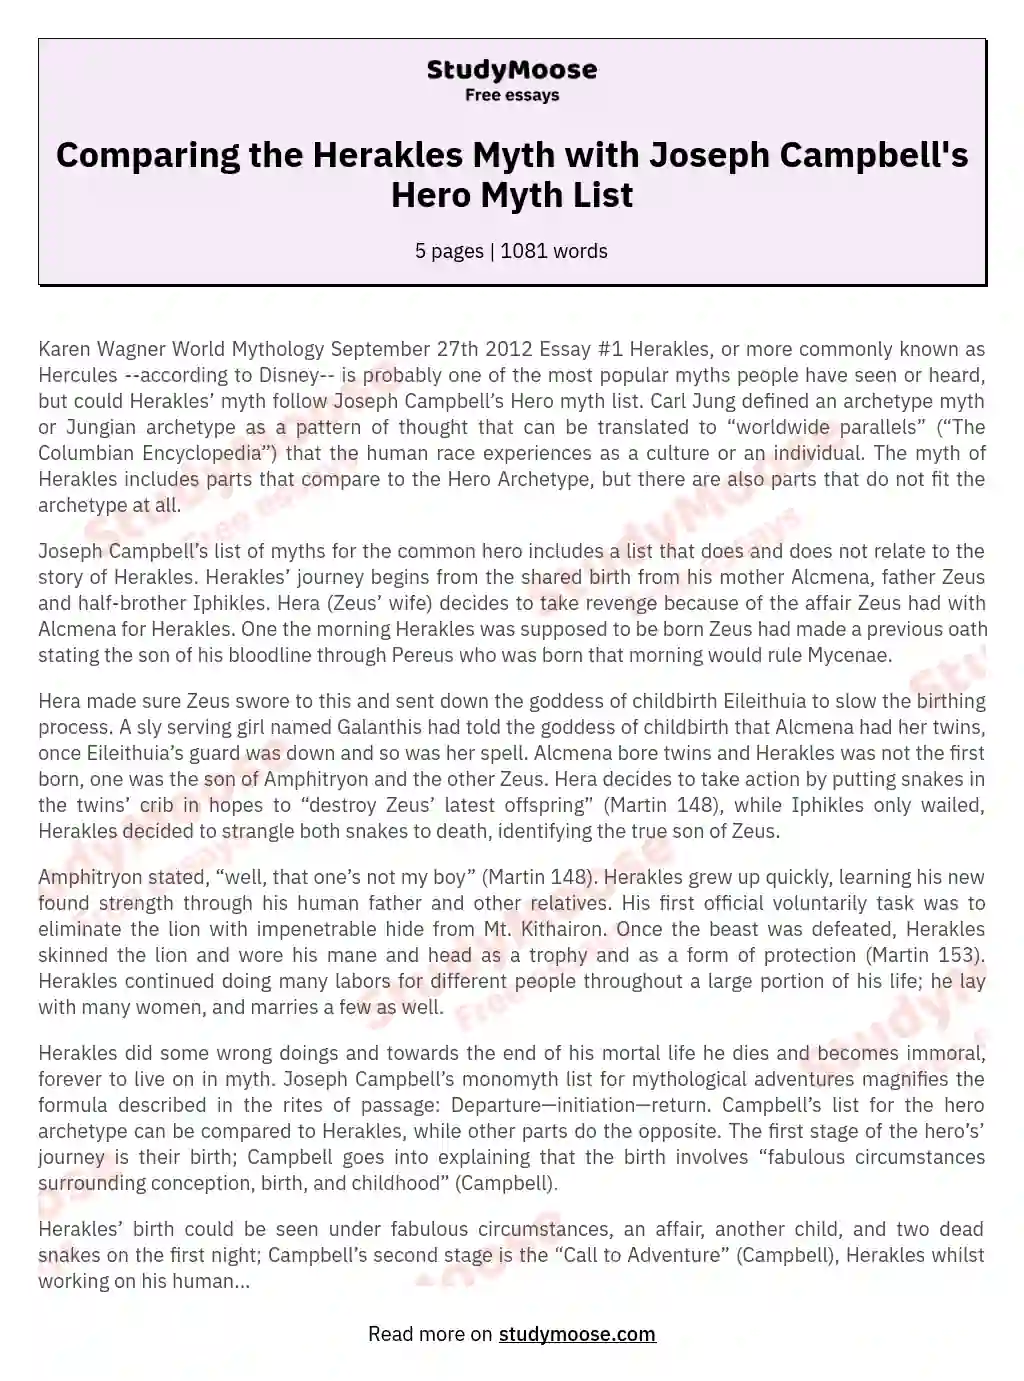 Comparing the Herakles Myth with Joseph Campbell's Hero Myth List